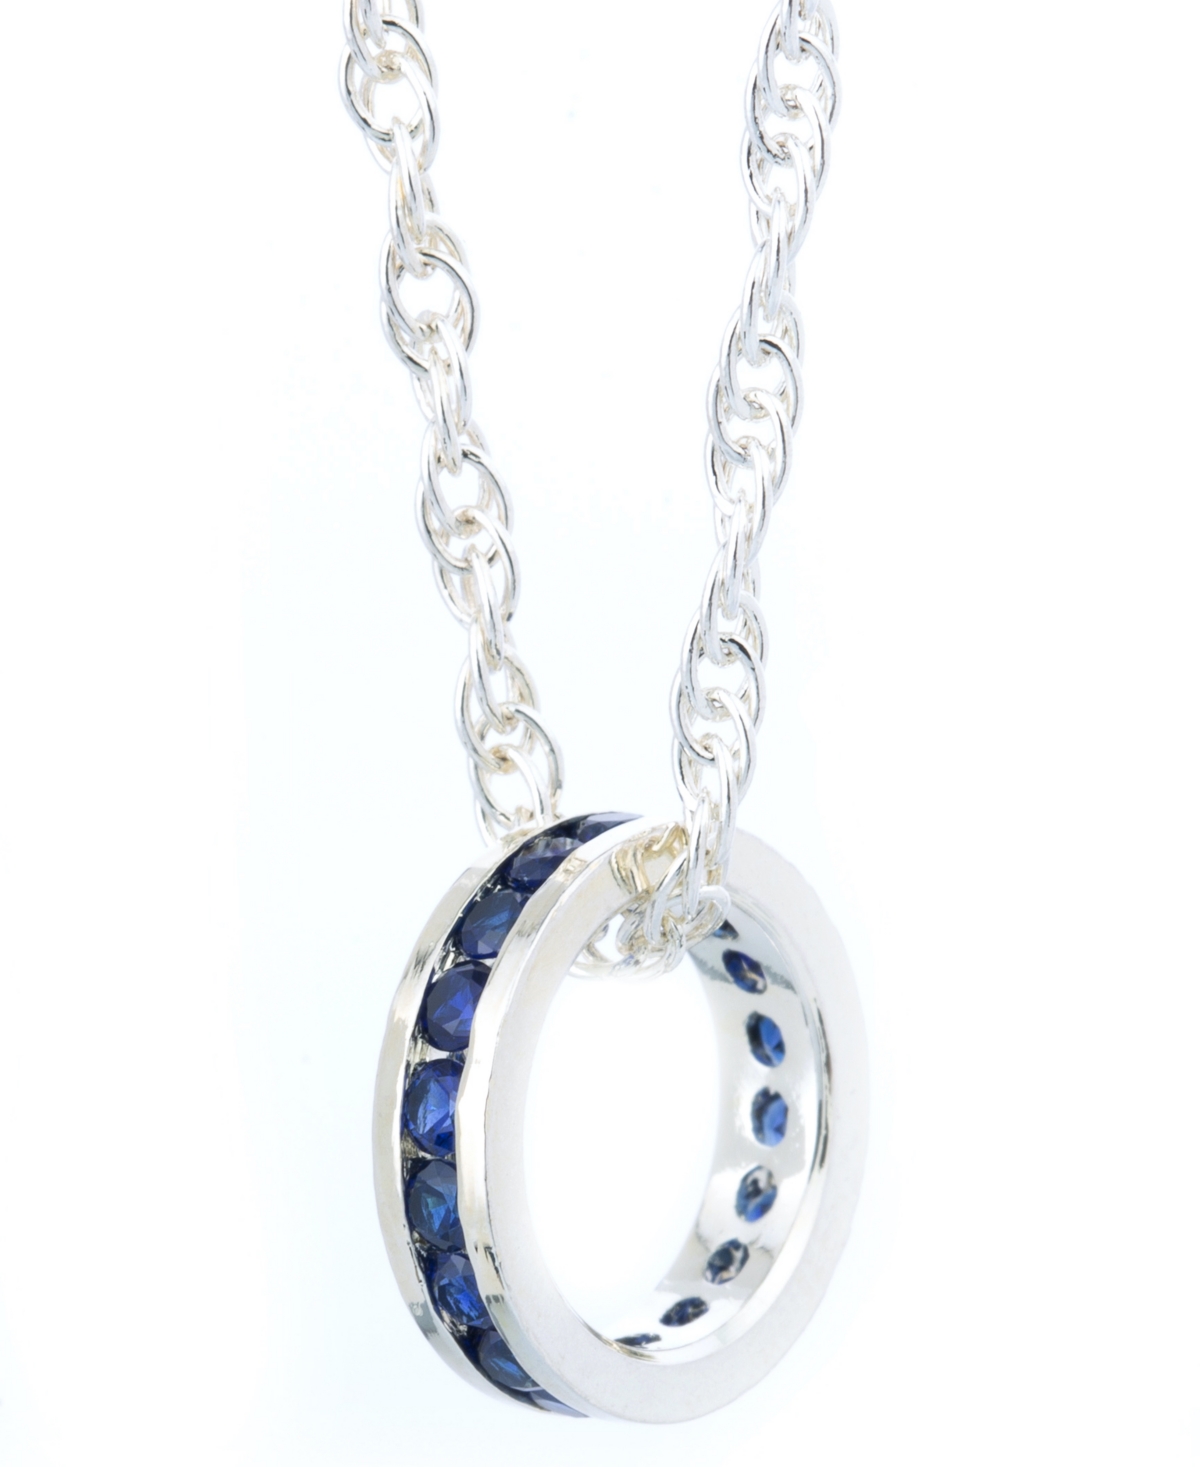 Semi Precious Birthstone Charm with 18" Chain in Sterling Silver - Blue Topaz